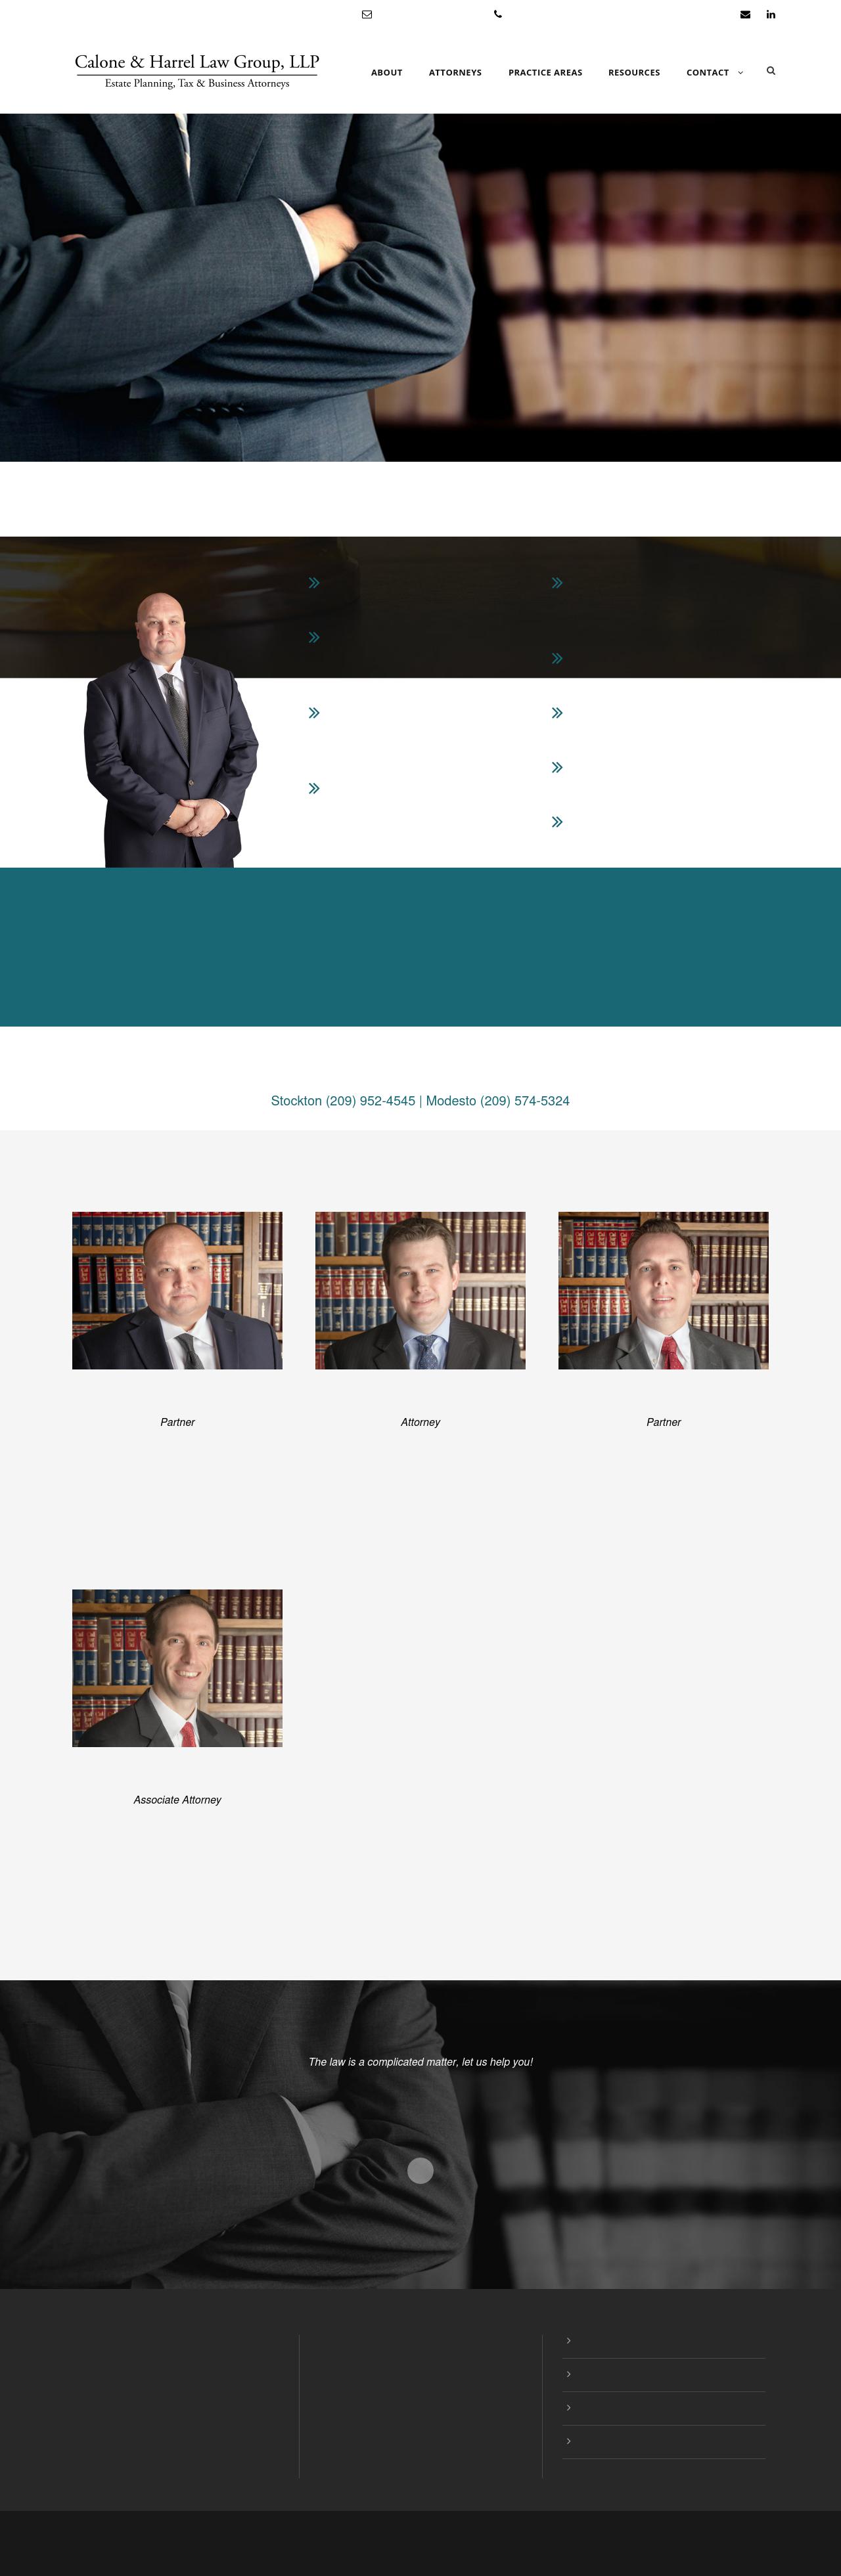 Calone & Harrel Law Group LLP - Stockton CA Lawyers